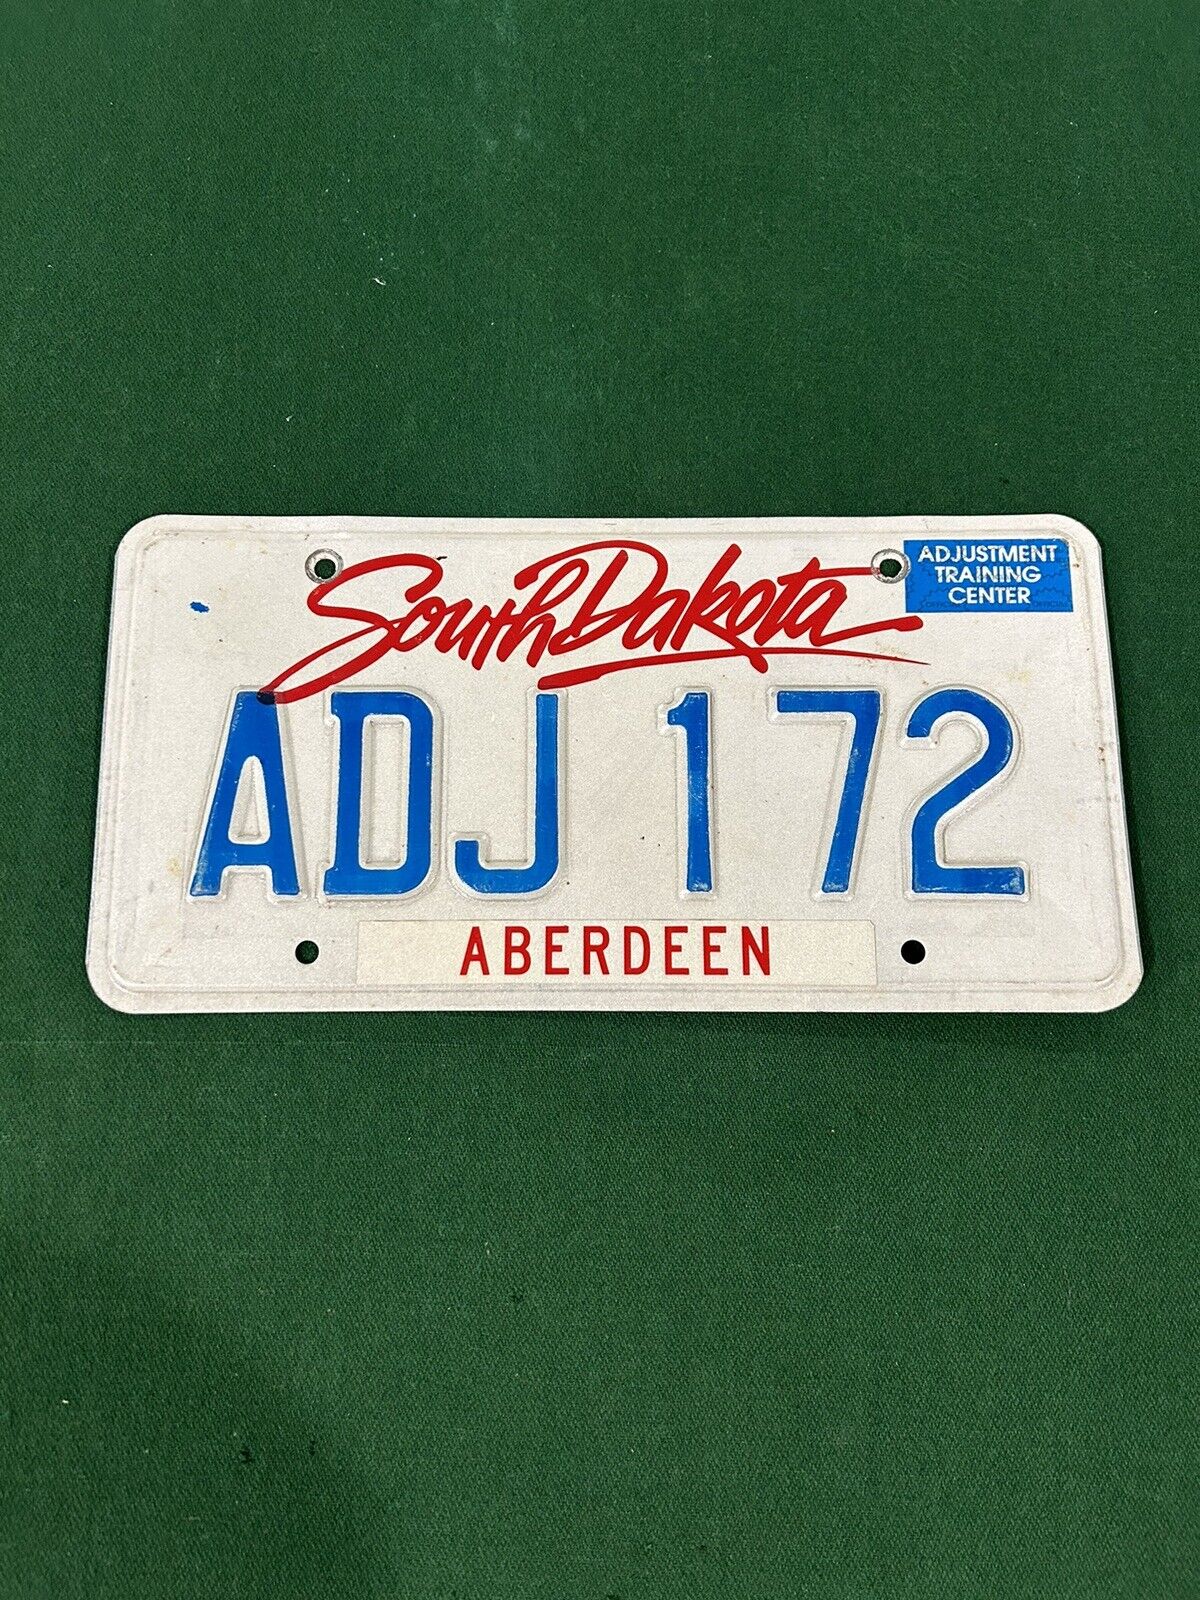 Extremely Rare Aberdeen South Dakota Adjustment Training Center License Plate.